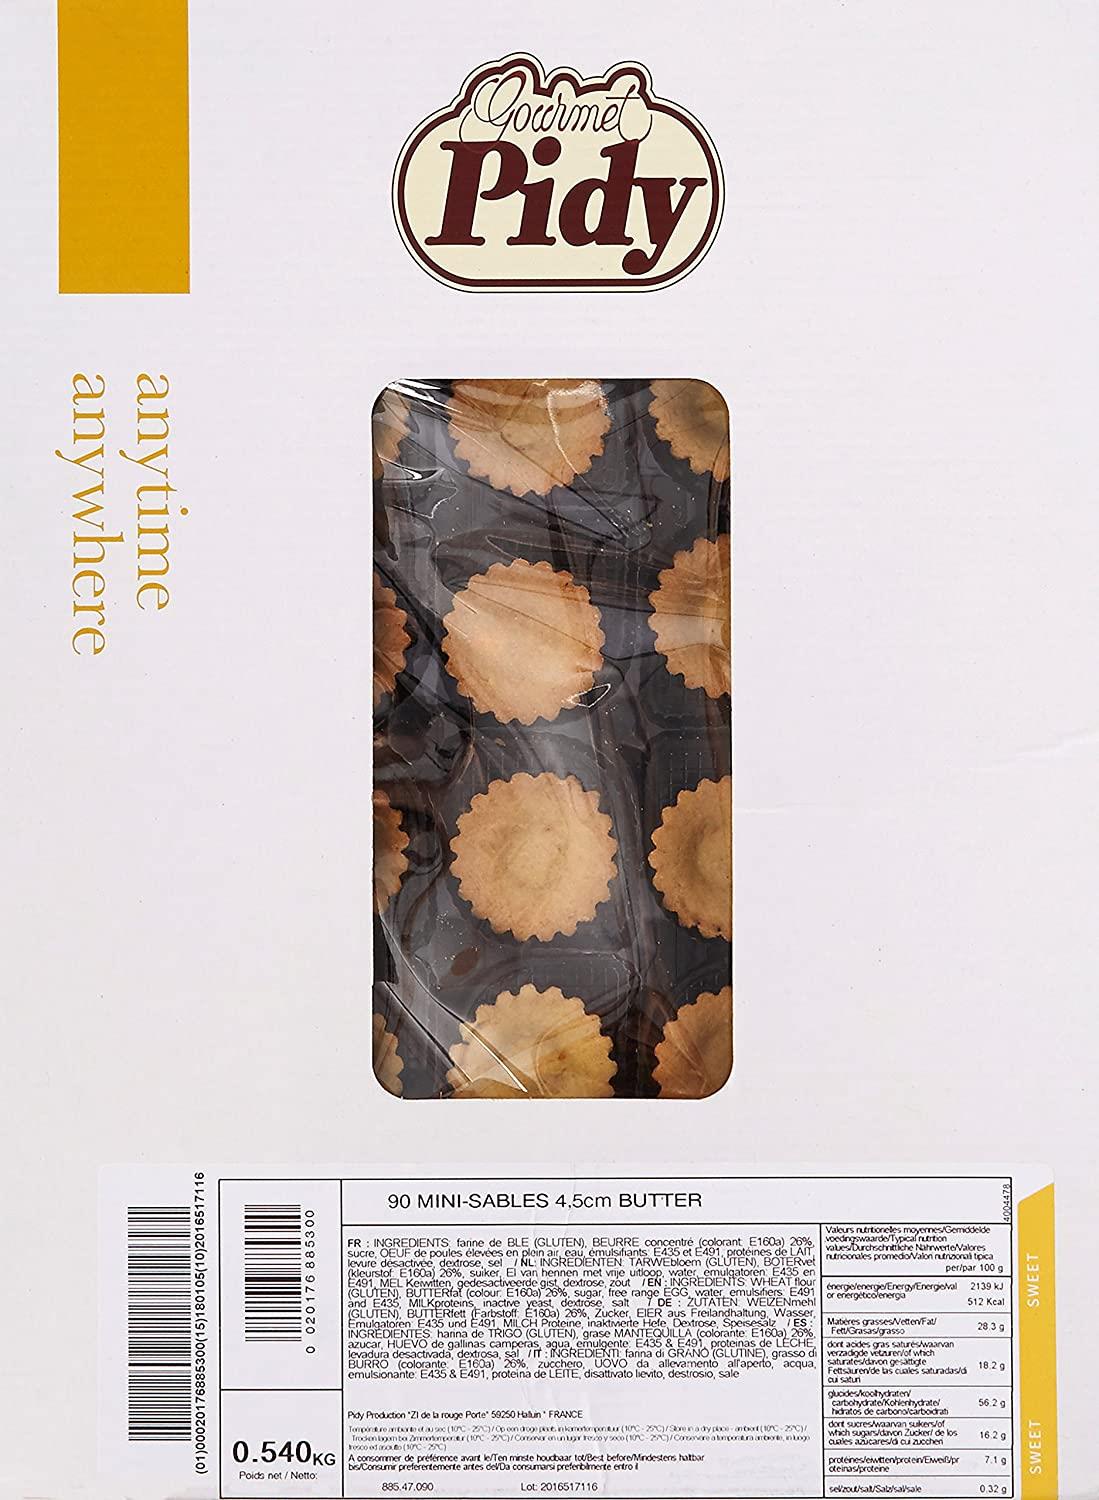 Pidy Mini Sweet Tartelette Pastry Case 90 x 4.5cm